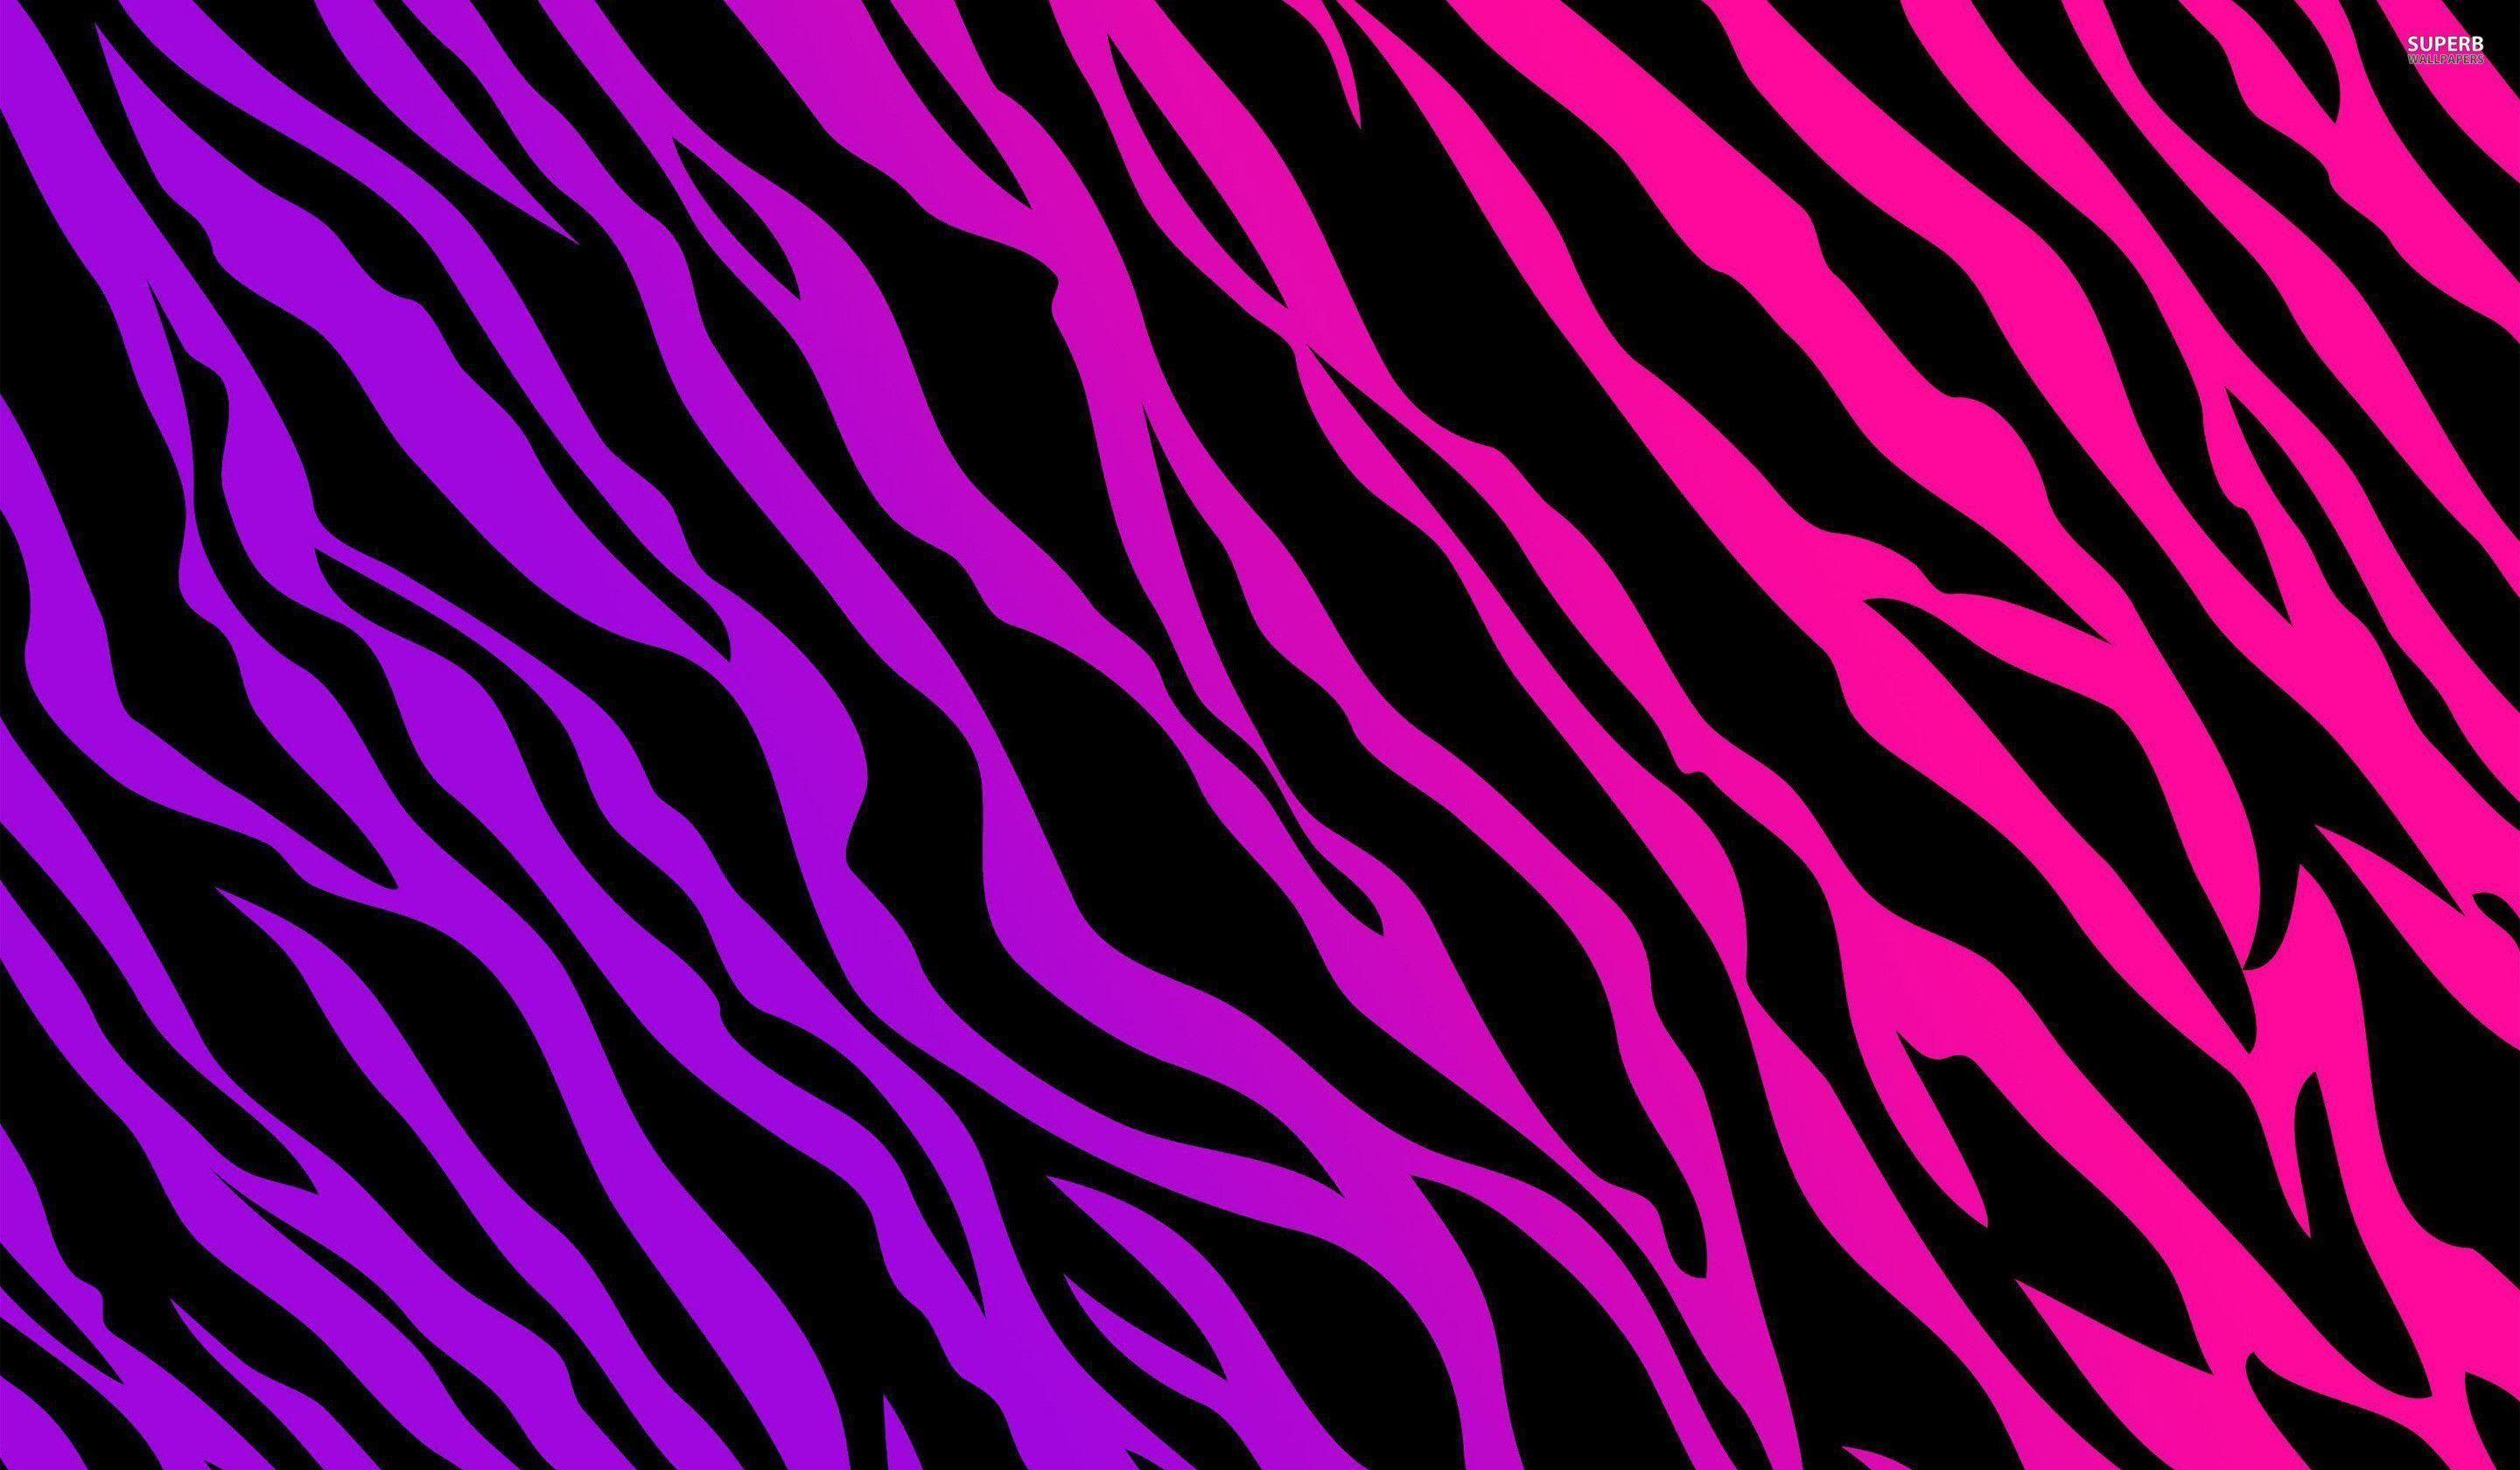 Neon Animals Wallpapers - Top Free Neon Animals ...